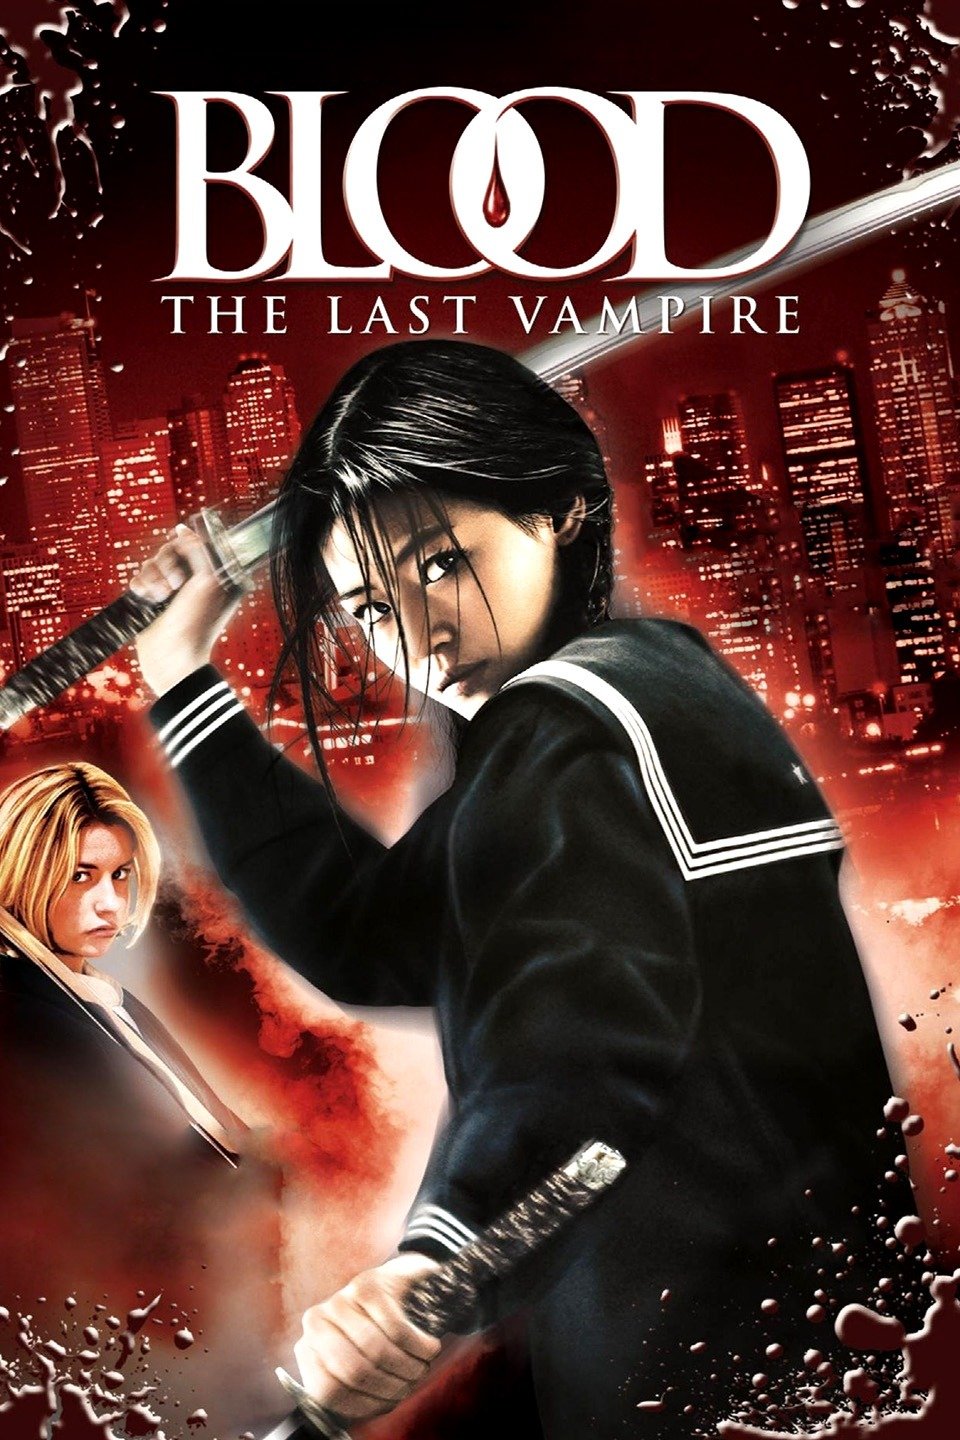 [MINI-HD] Blood The Last Vampire (2009) ยัยตัวร้าย สายพันธุ์อมตะ [1080p] [พากย์ไทย 5.1 + อังกฤษ DTS] [บรรยายไทย + อังกฤษ] [เสียงไทย + ซับไทย] [ONE2UP]